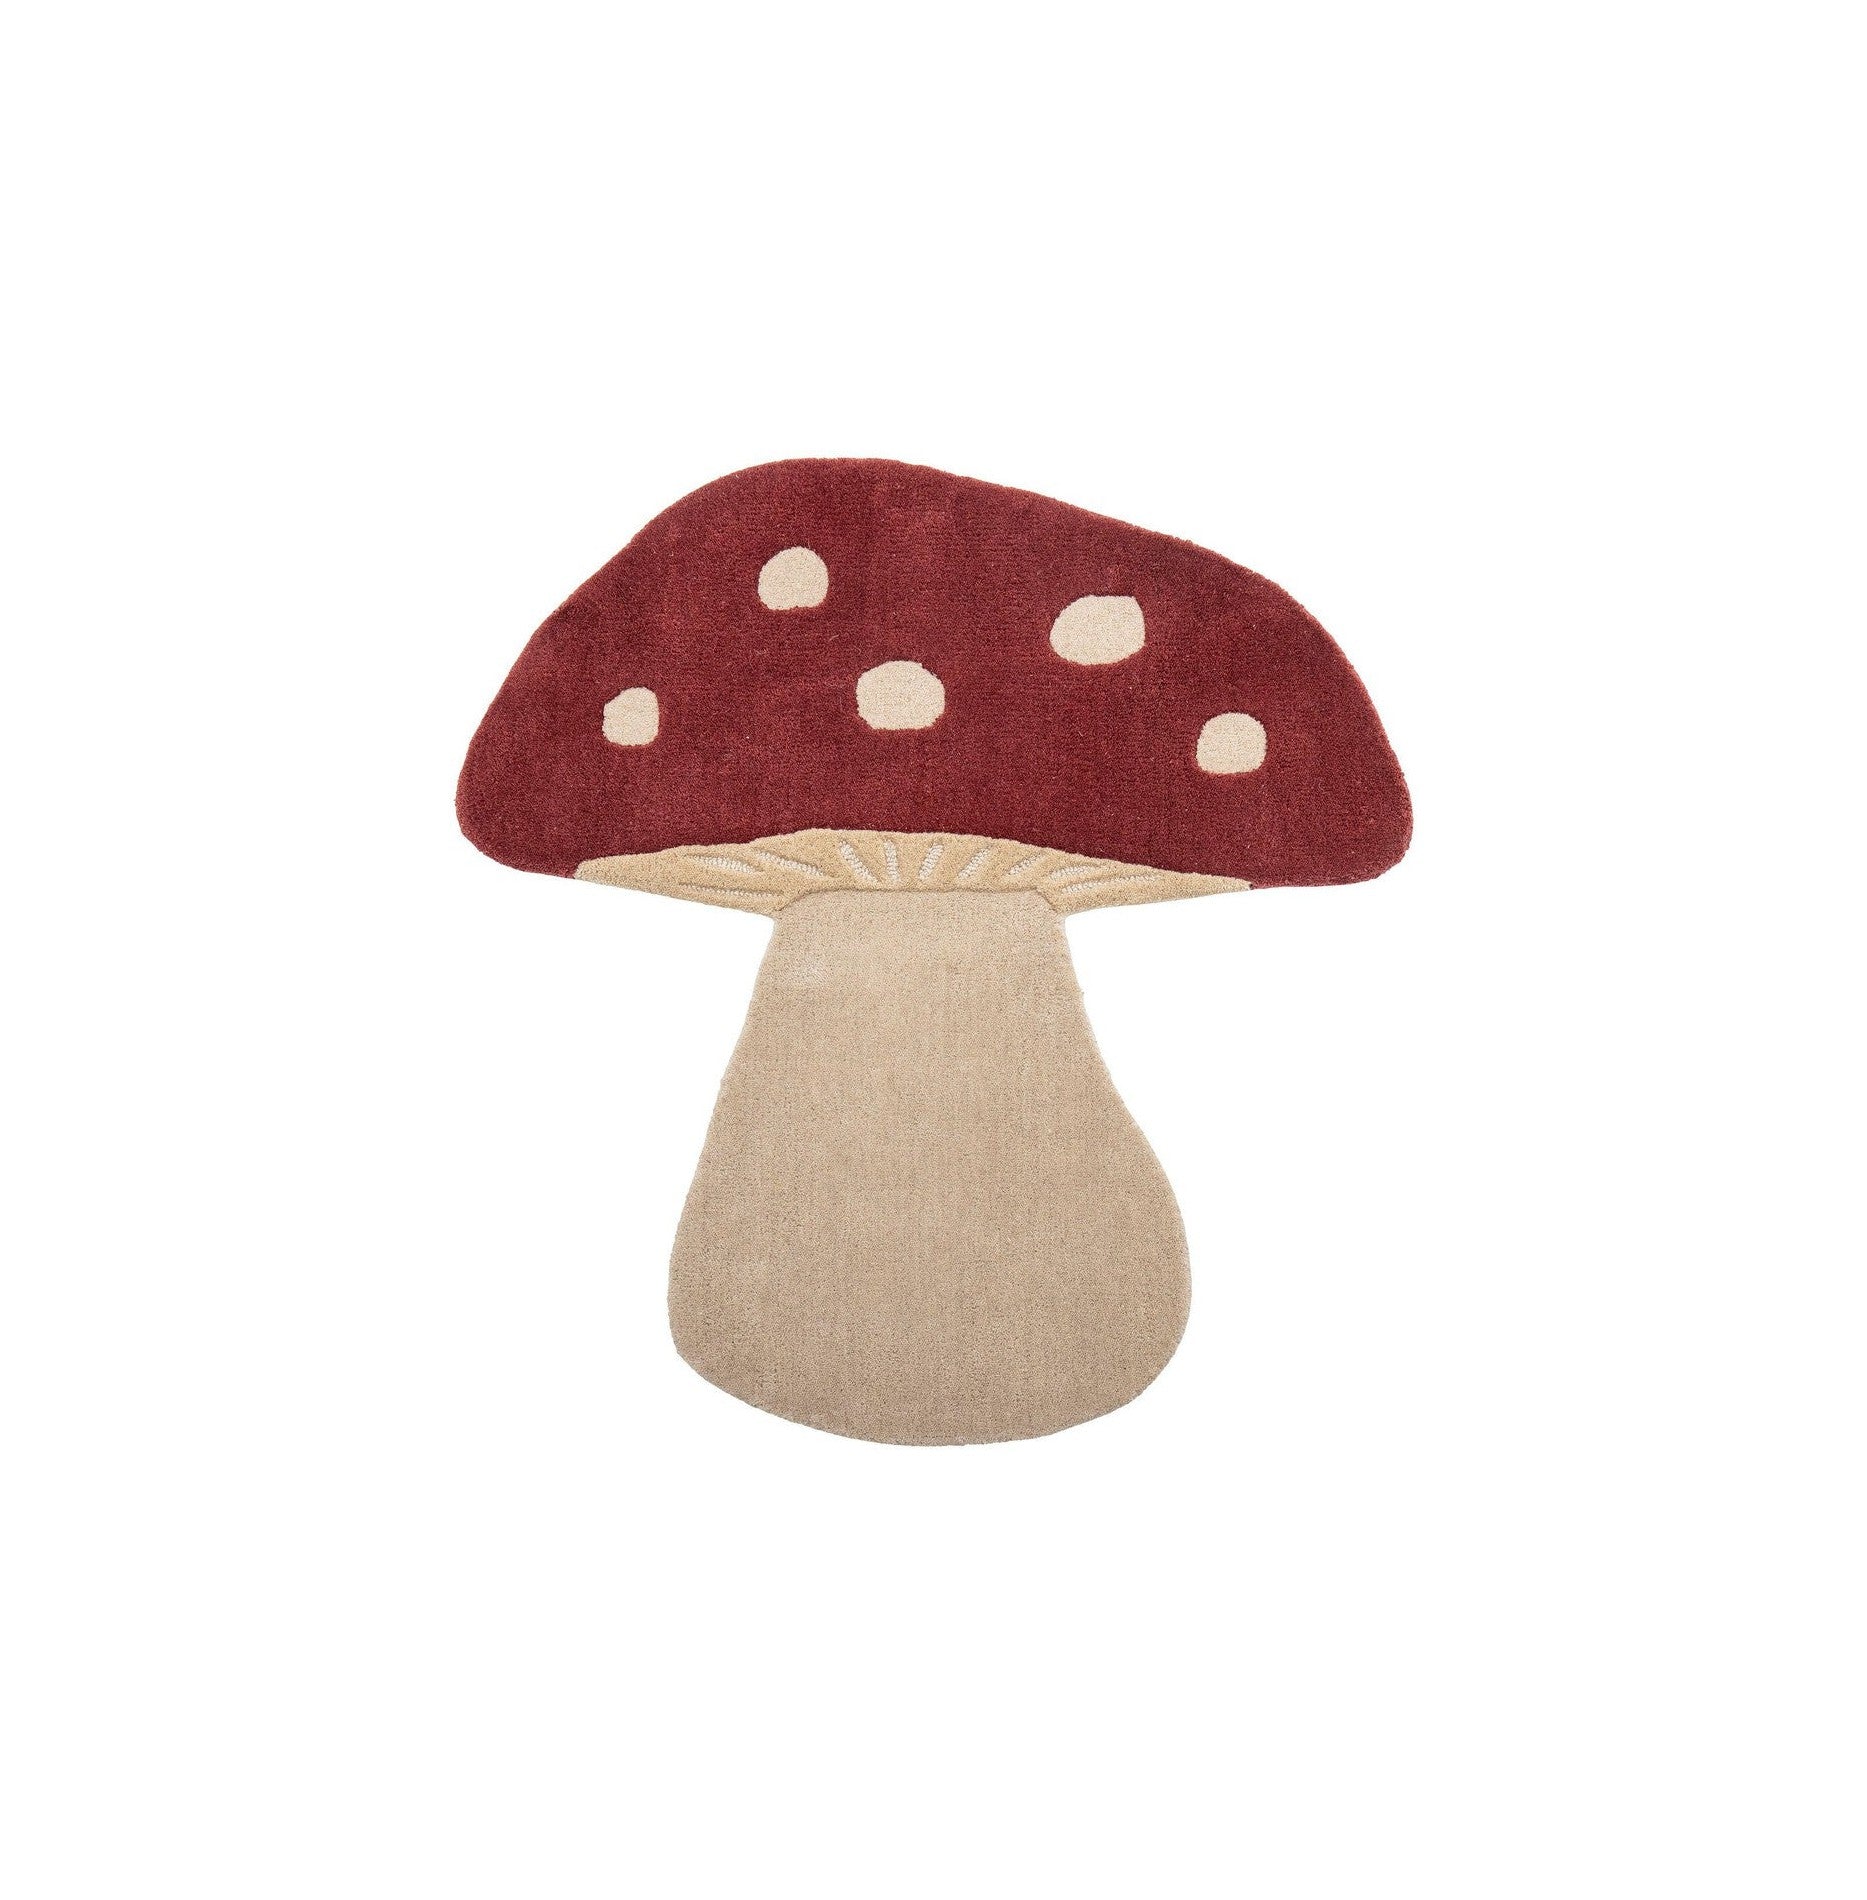 Bloomingville MINI Mushroom Rug, Red, Wool